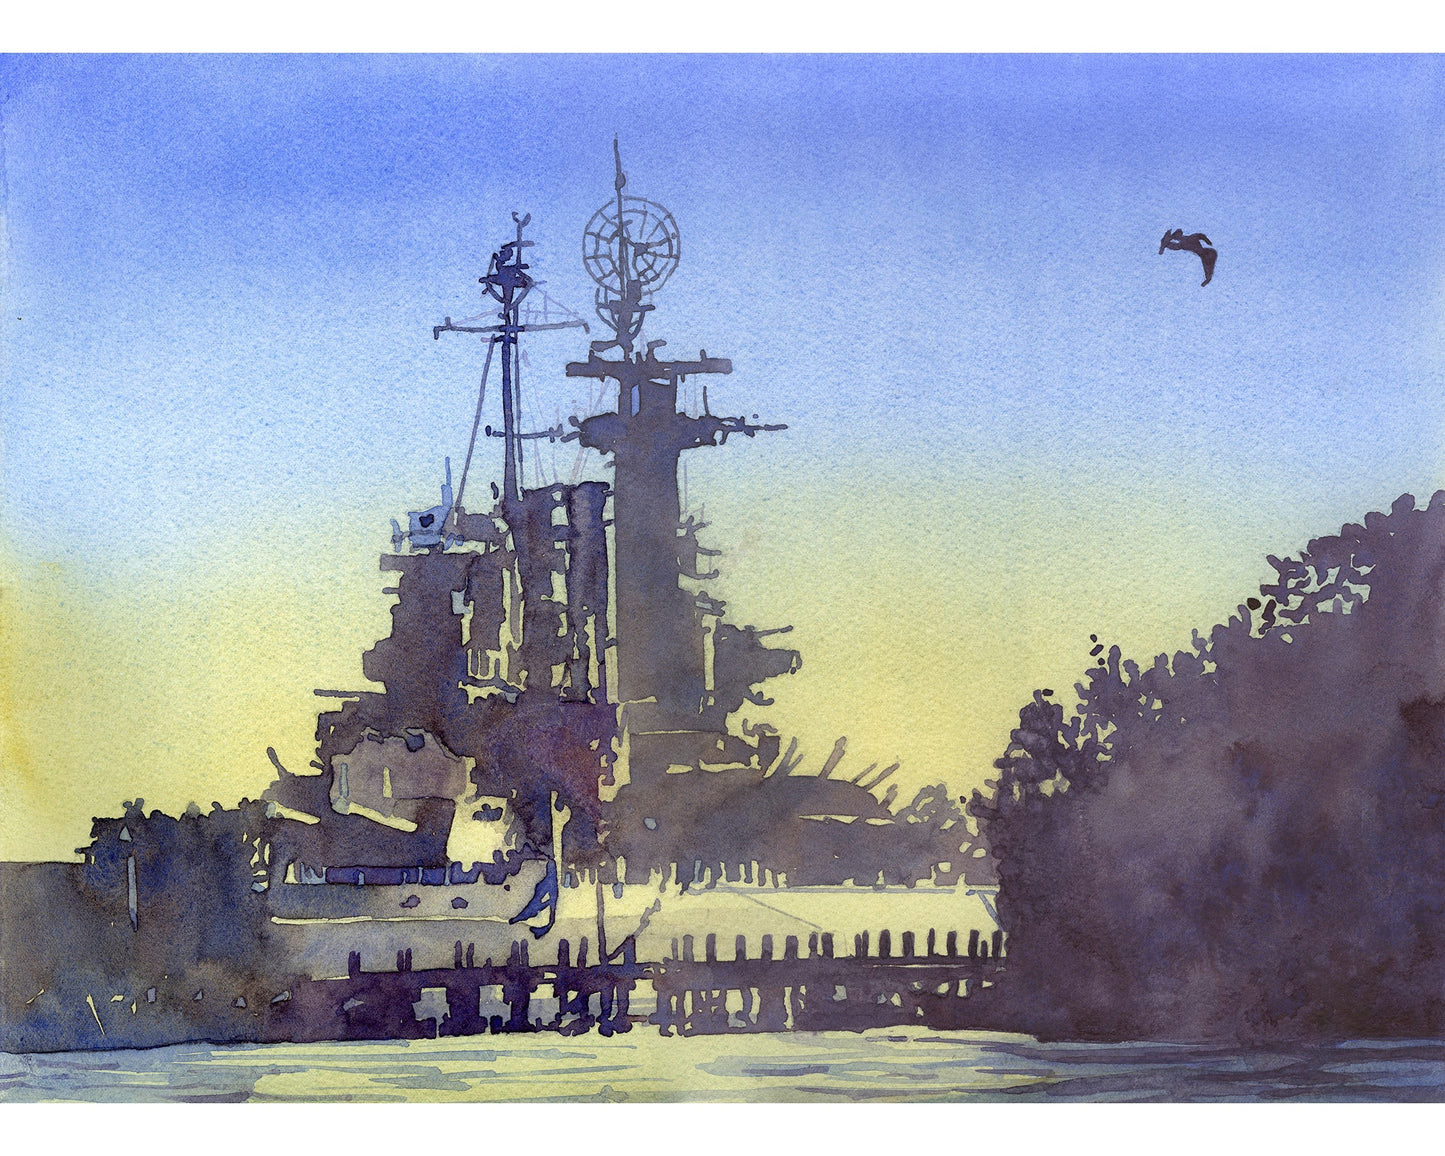 Exterior of Battleship North Carolina at sunset in the coastal city of Wilmington, NC.  Watercolor painting Battleship Wilmington NC artwork.